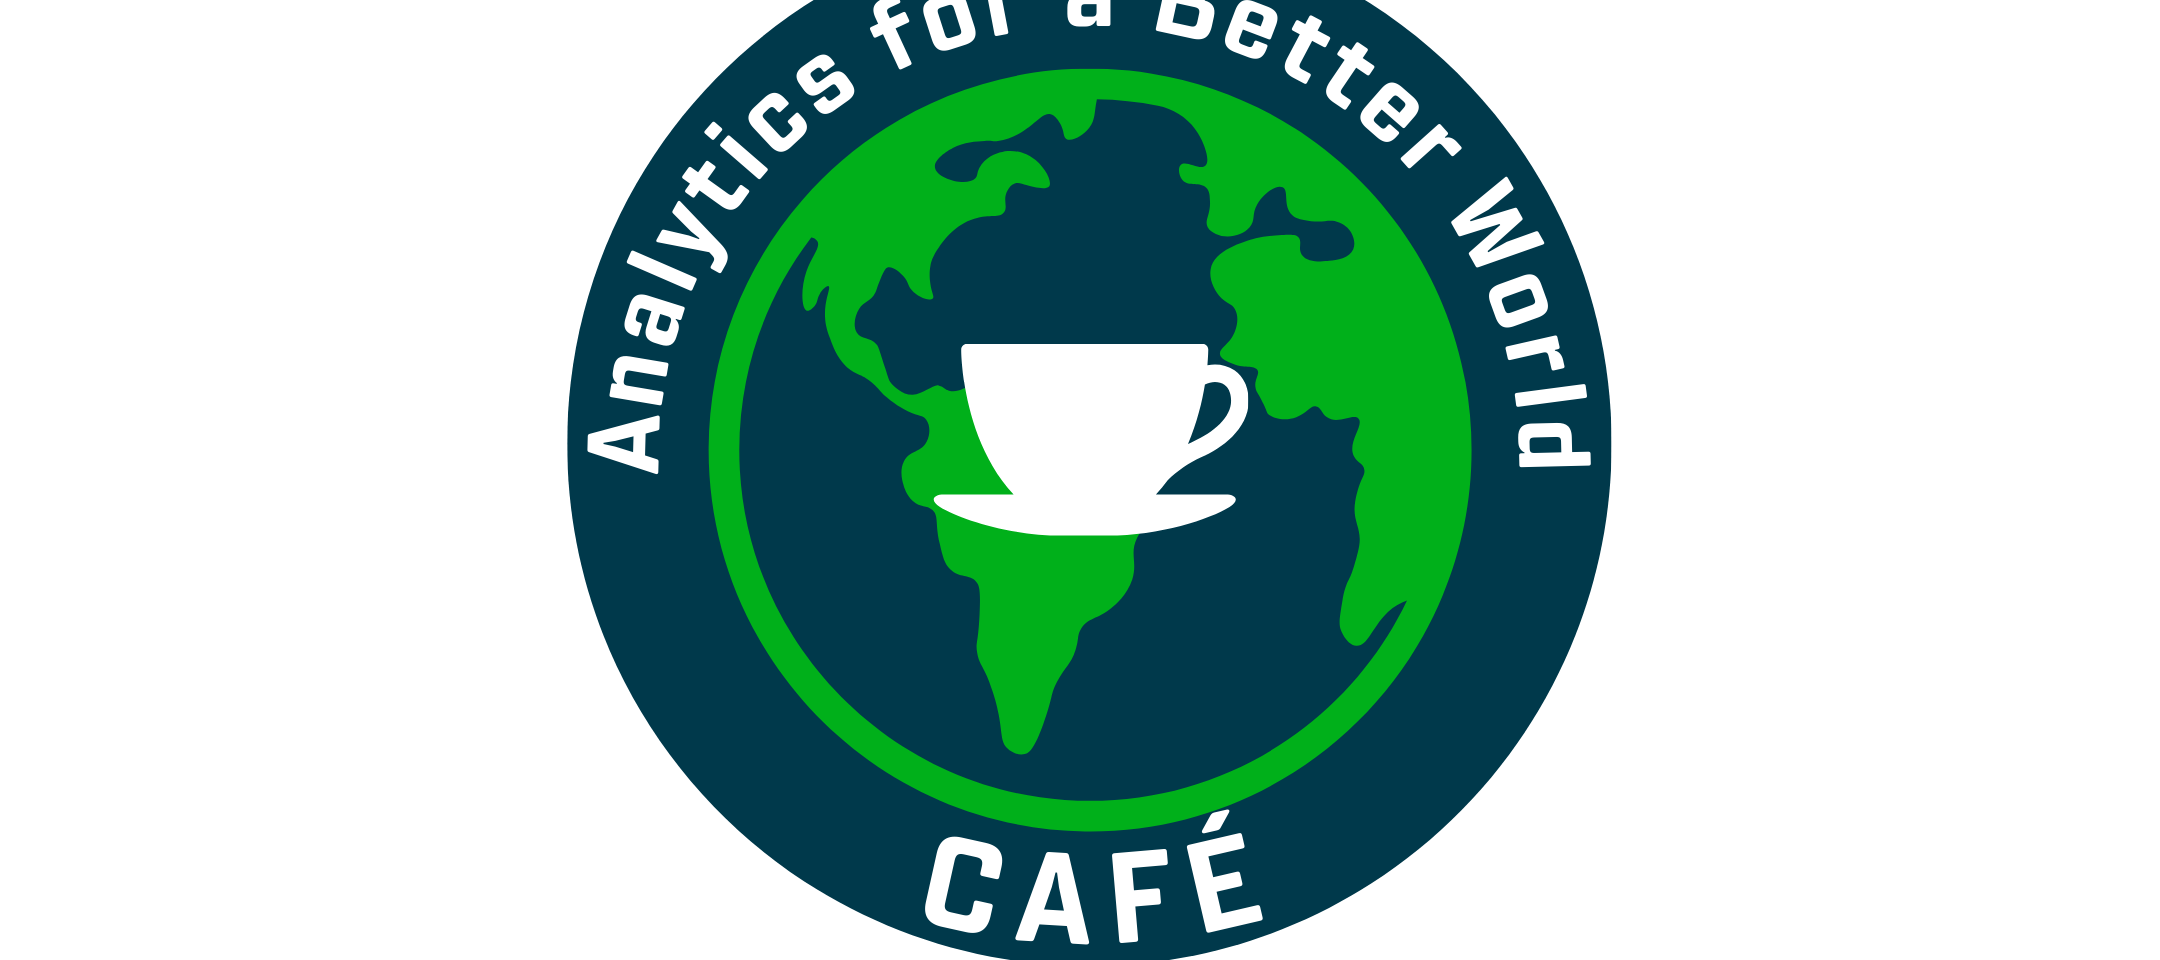 Introducing the ABW Café Series!